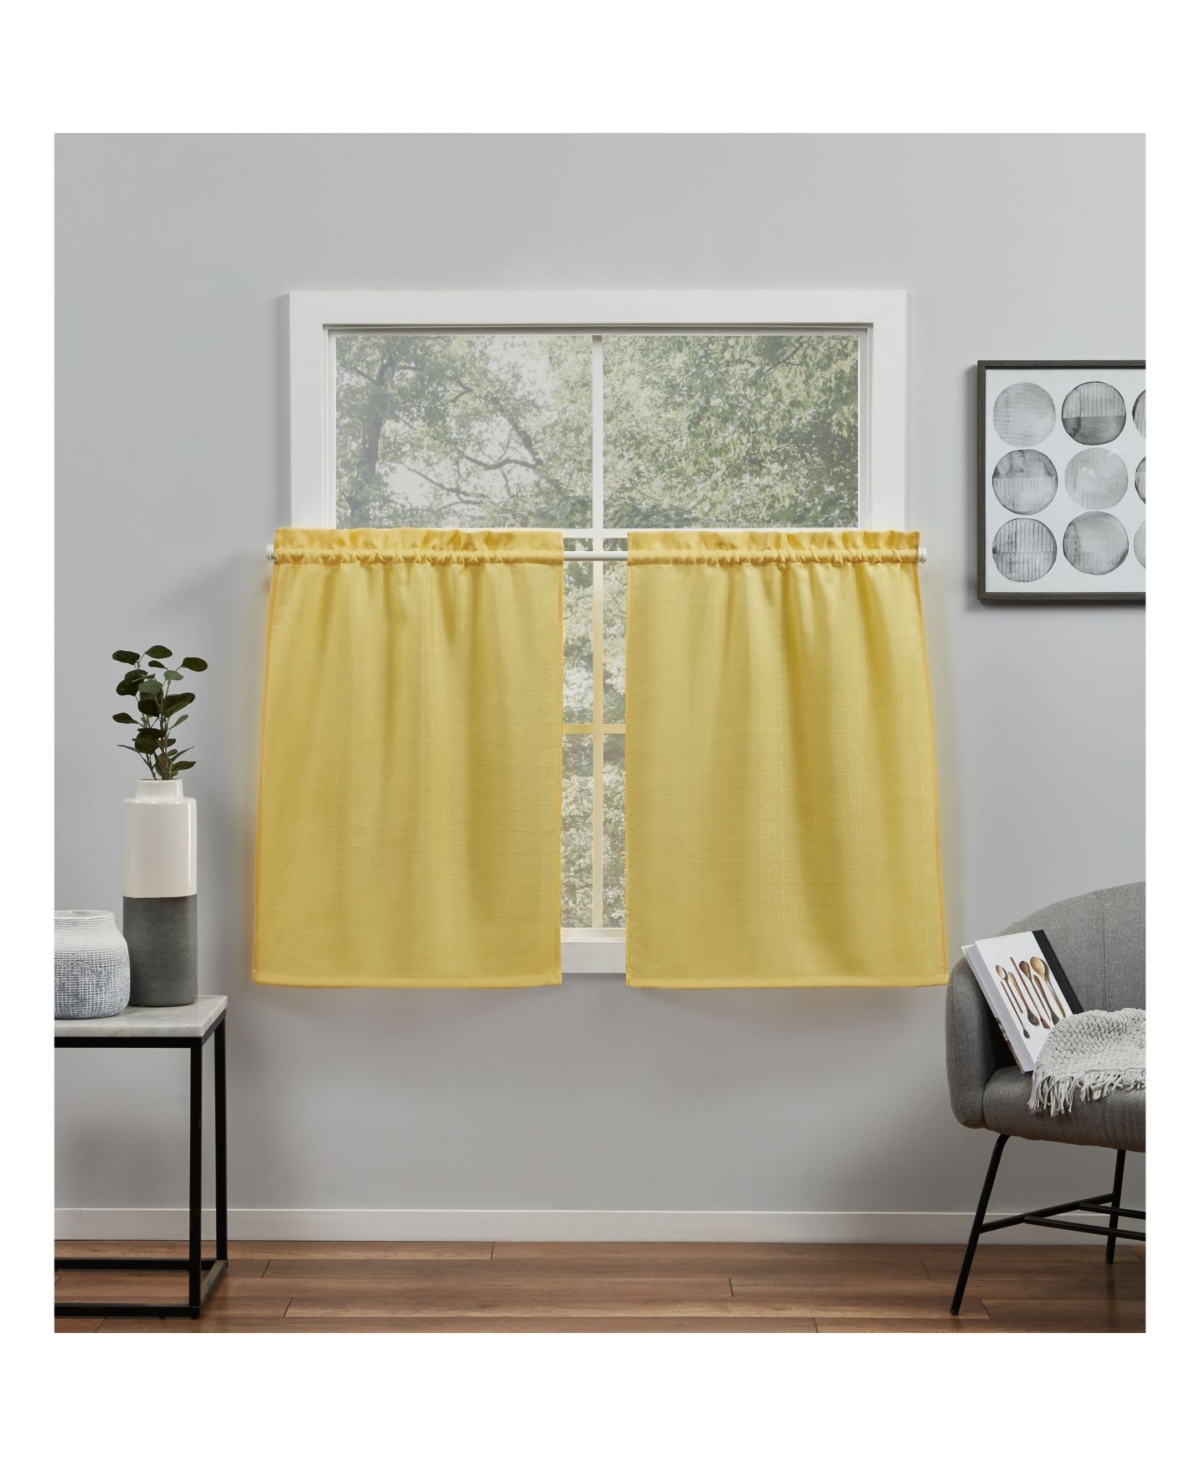 Curtains Loha Light Filtering Rod Pocket Tier Curtain Panel Pair, 26" x 36", Set of 2 - Yellow